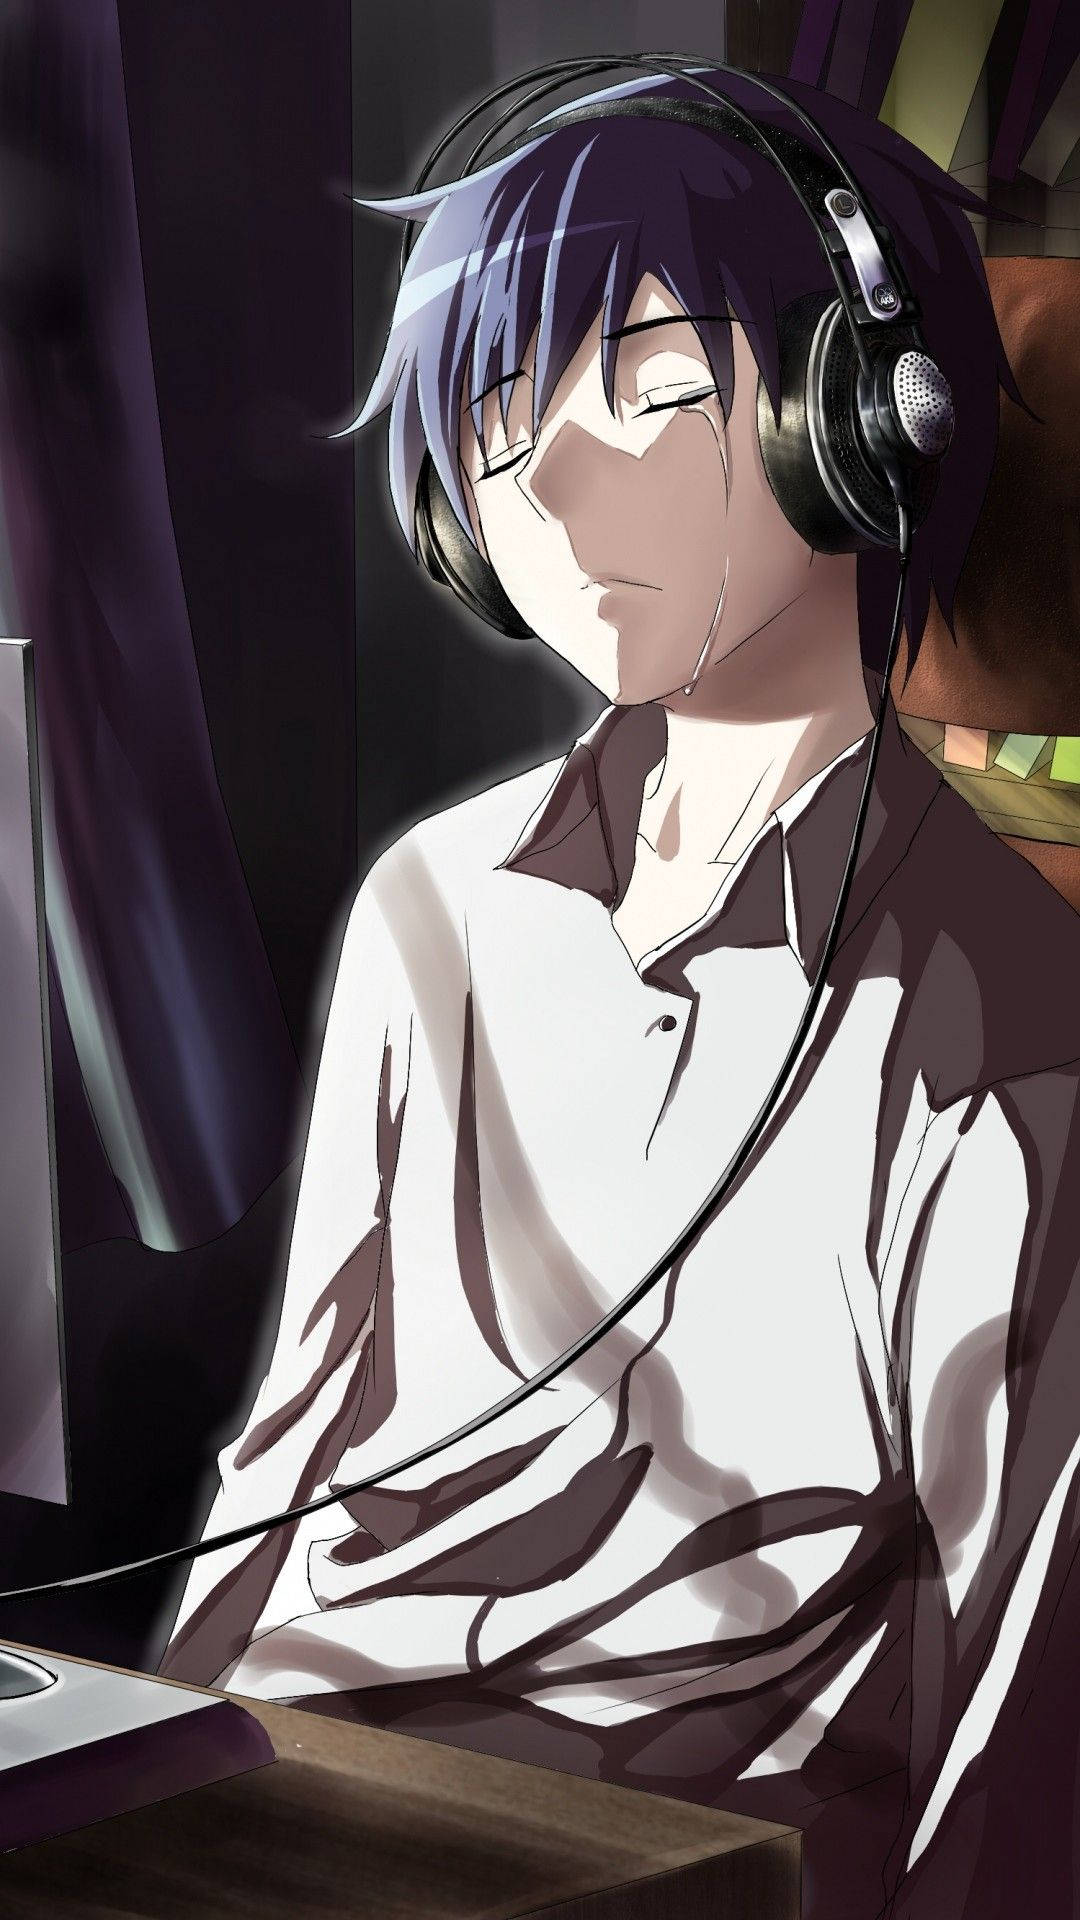 Sad Anime Boy With Headphones Aesthetic